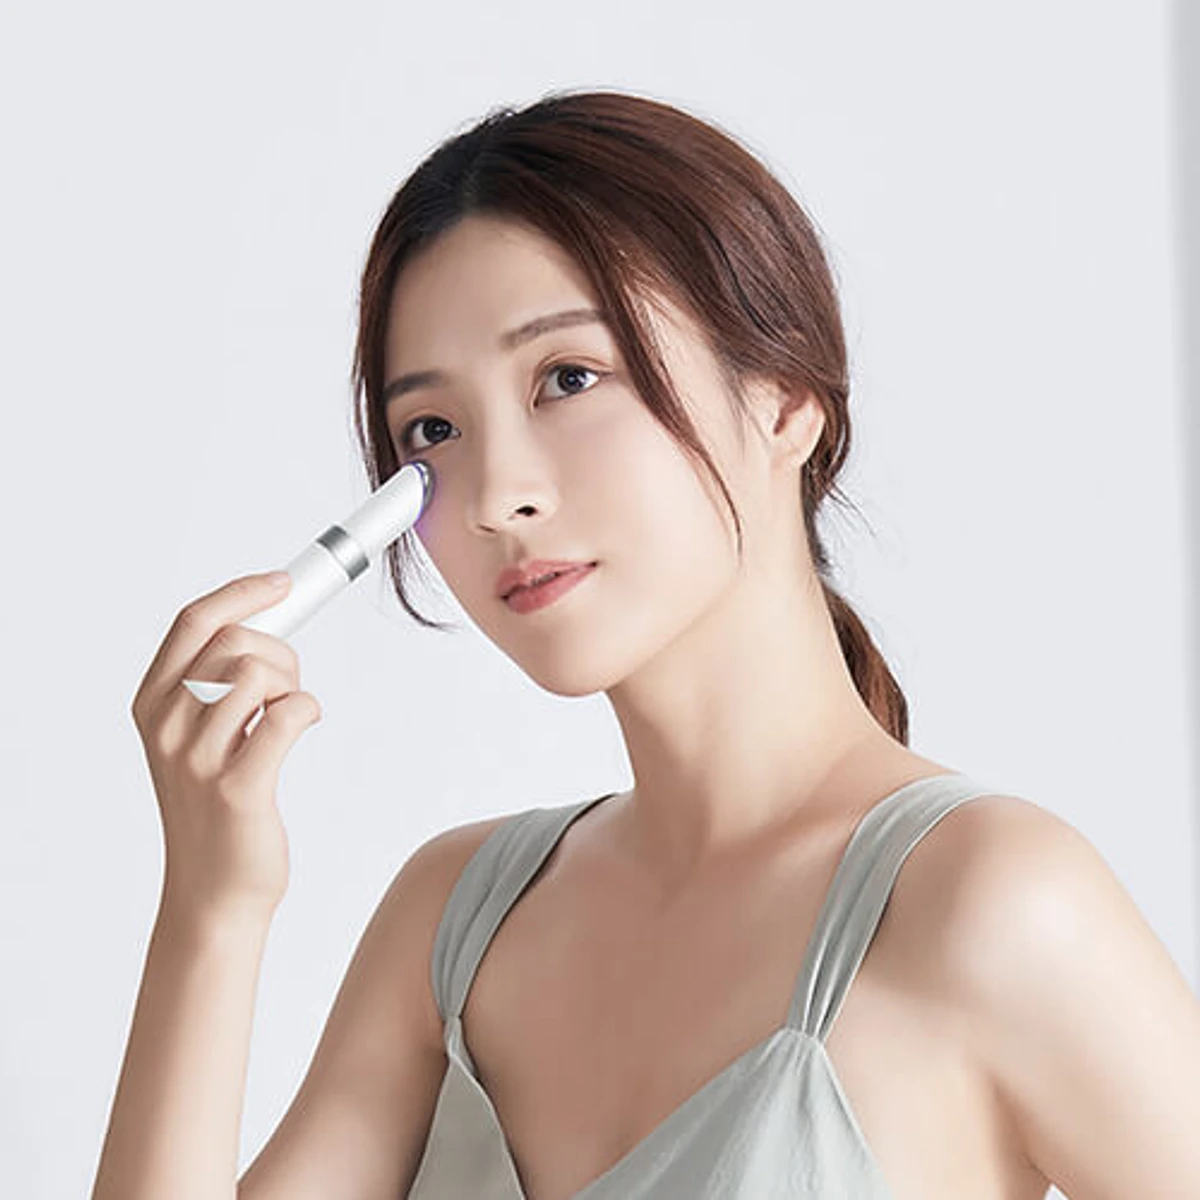 Xiaomi WellSkins Warm Colored Light Massage Beautiful Eye Instrument Heated Eye Care 3 Gears Vibration Massager